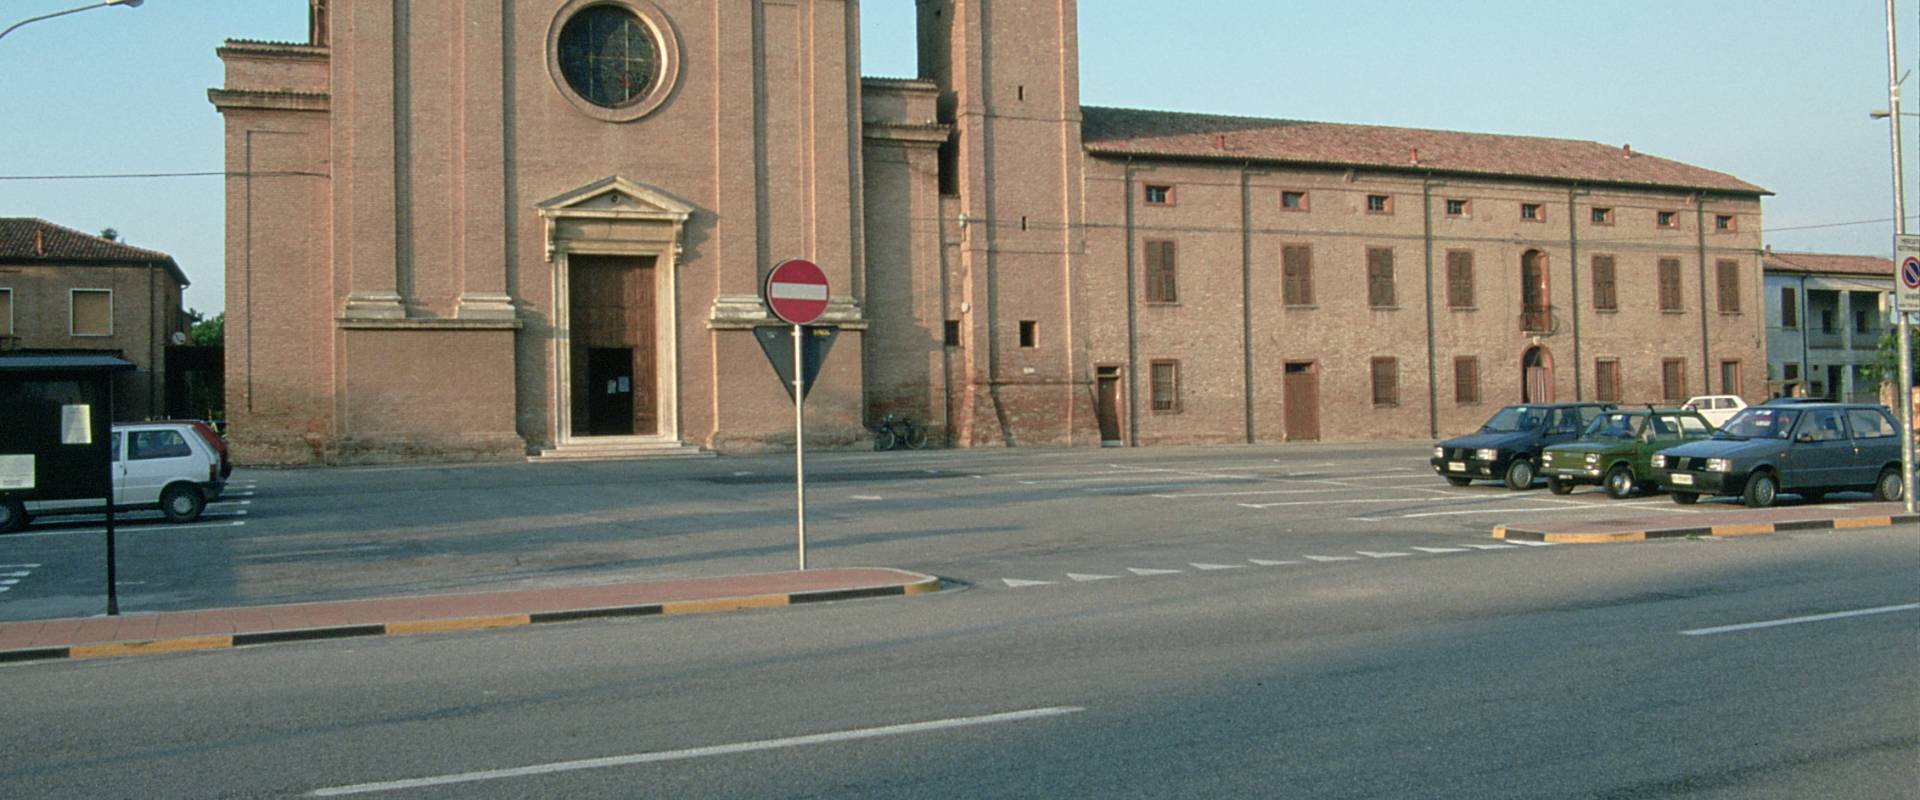 Cologna, Chiesa di Santa Margherita foto di Samaritani